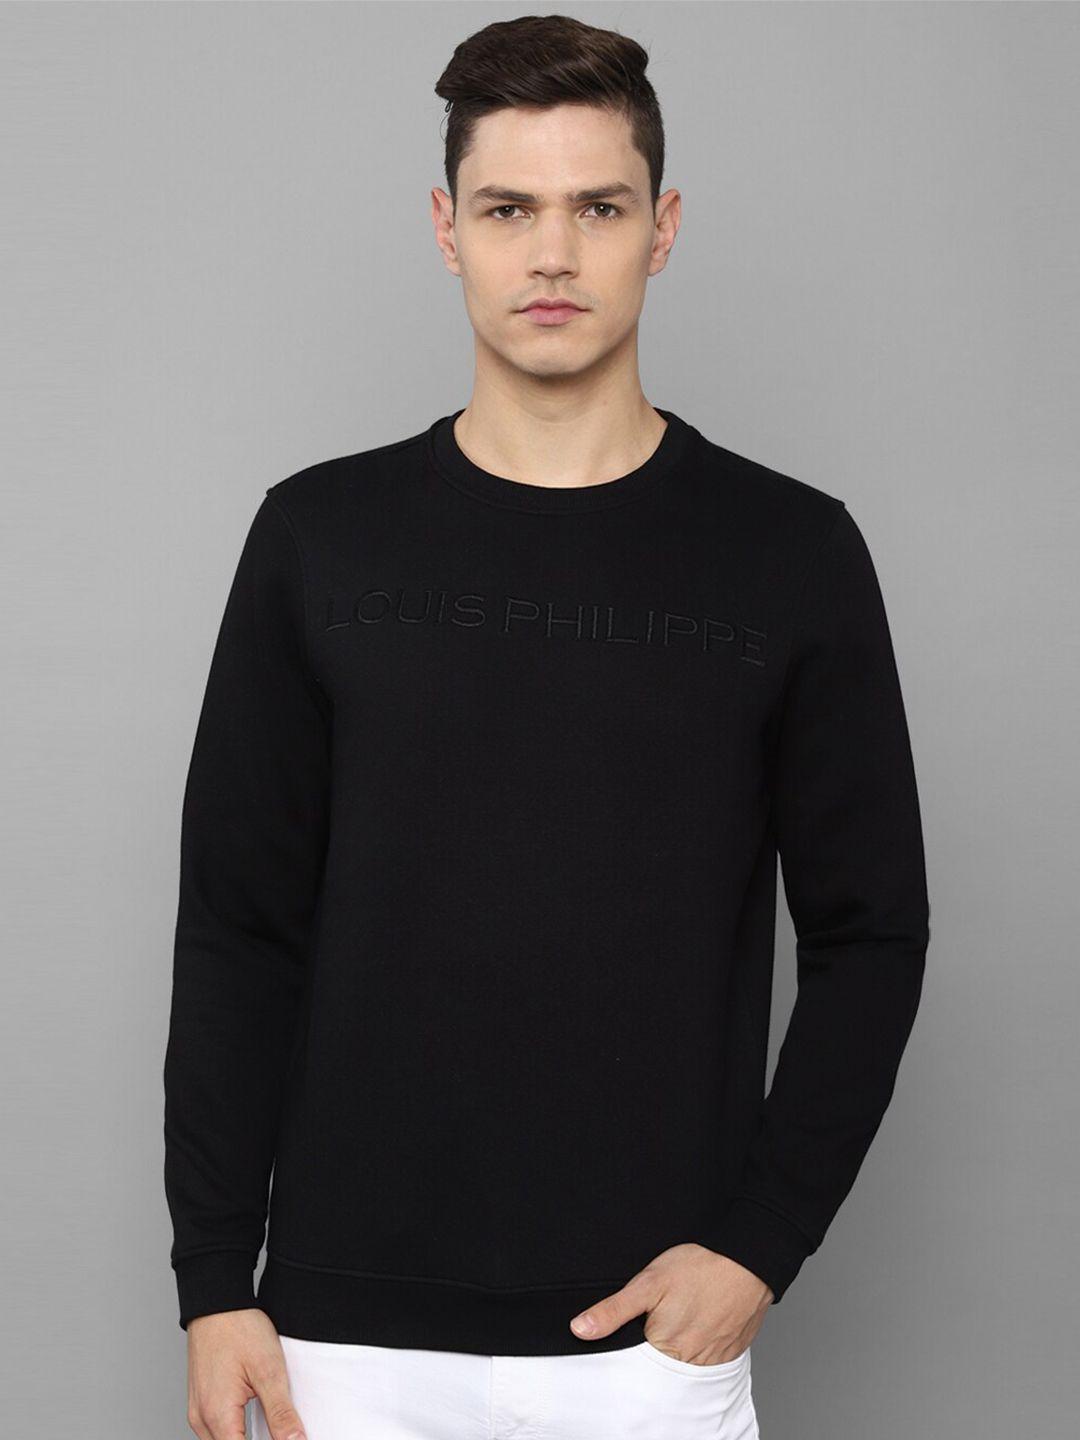 louis philippe men black solid cotton sweatshirt